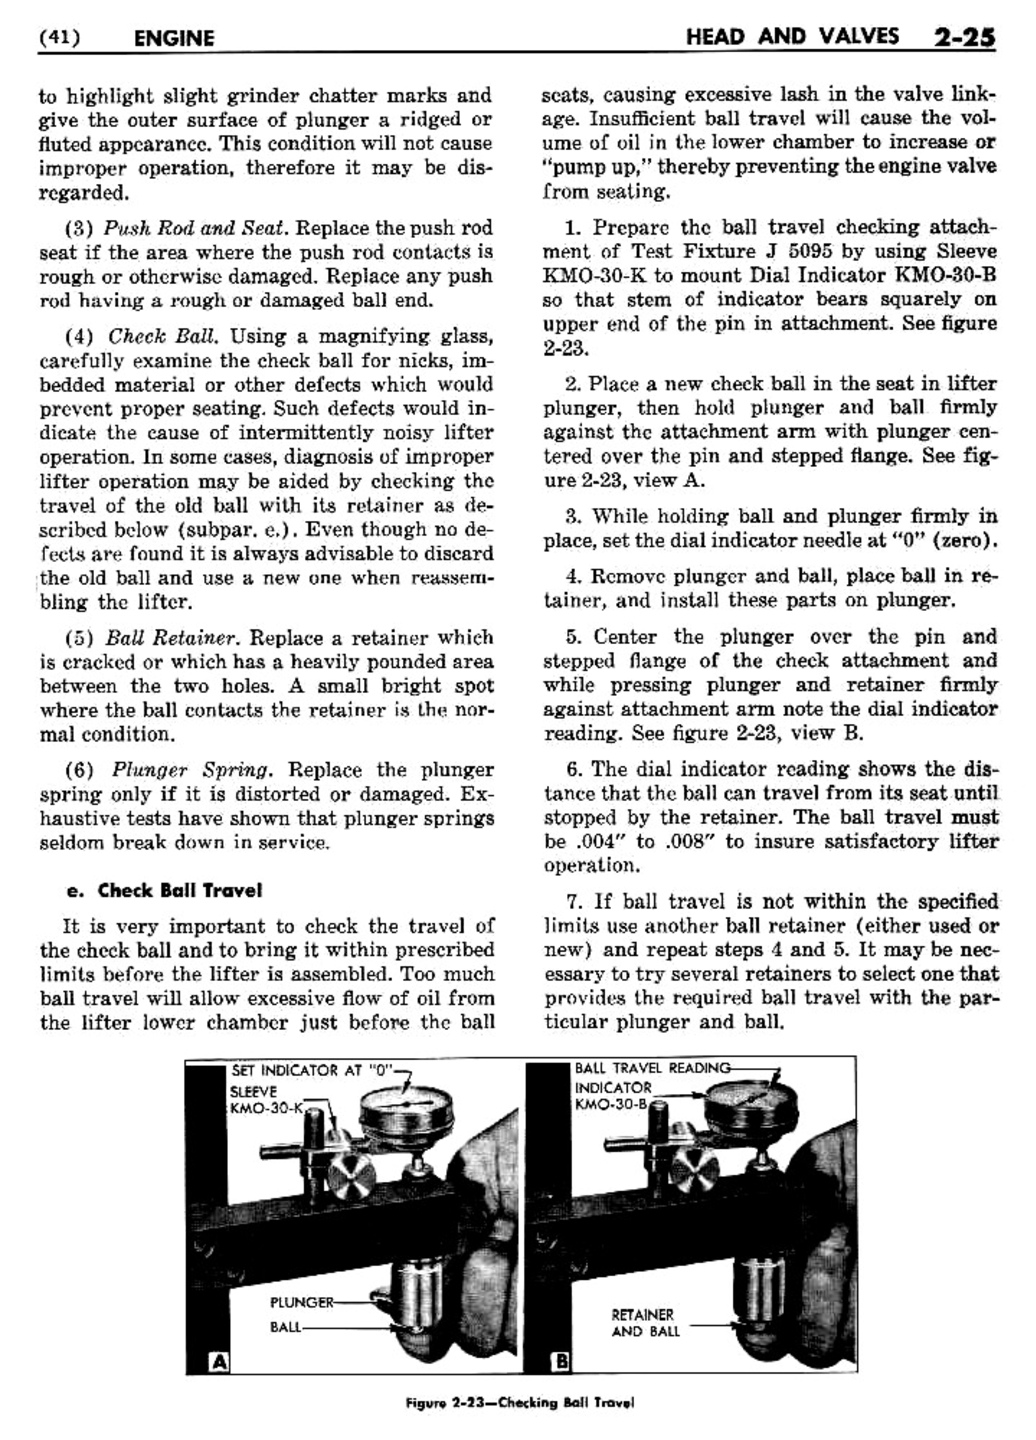 n_03 1955 Buick Shop Manual - Engine-025-025.jpg